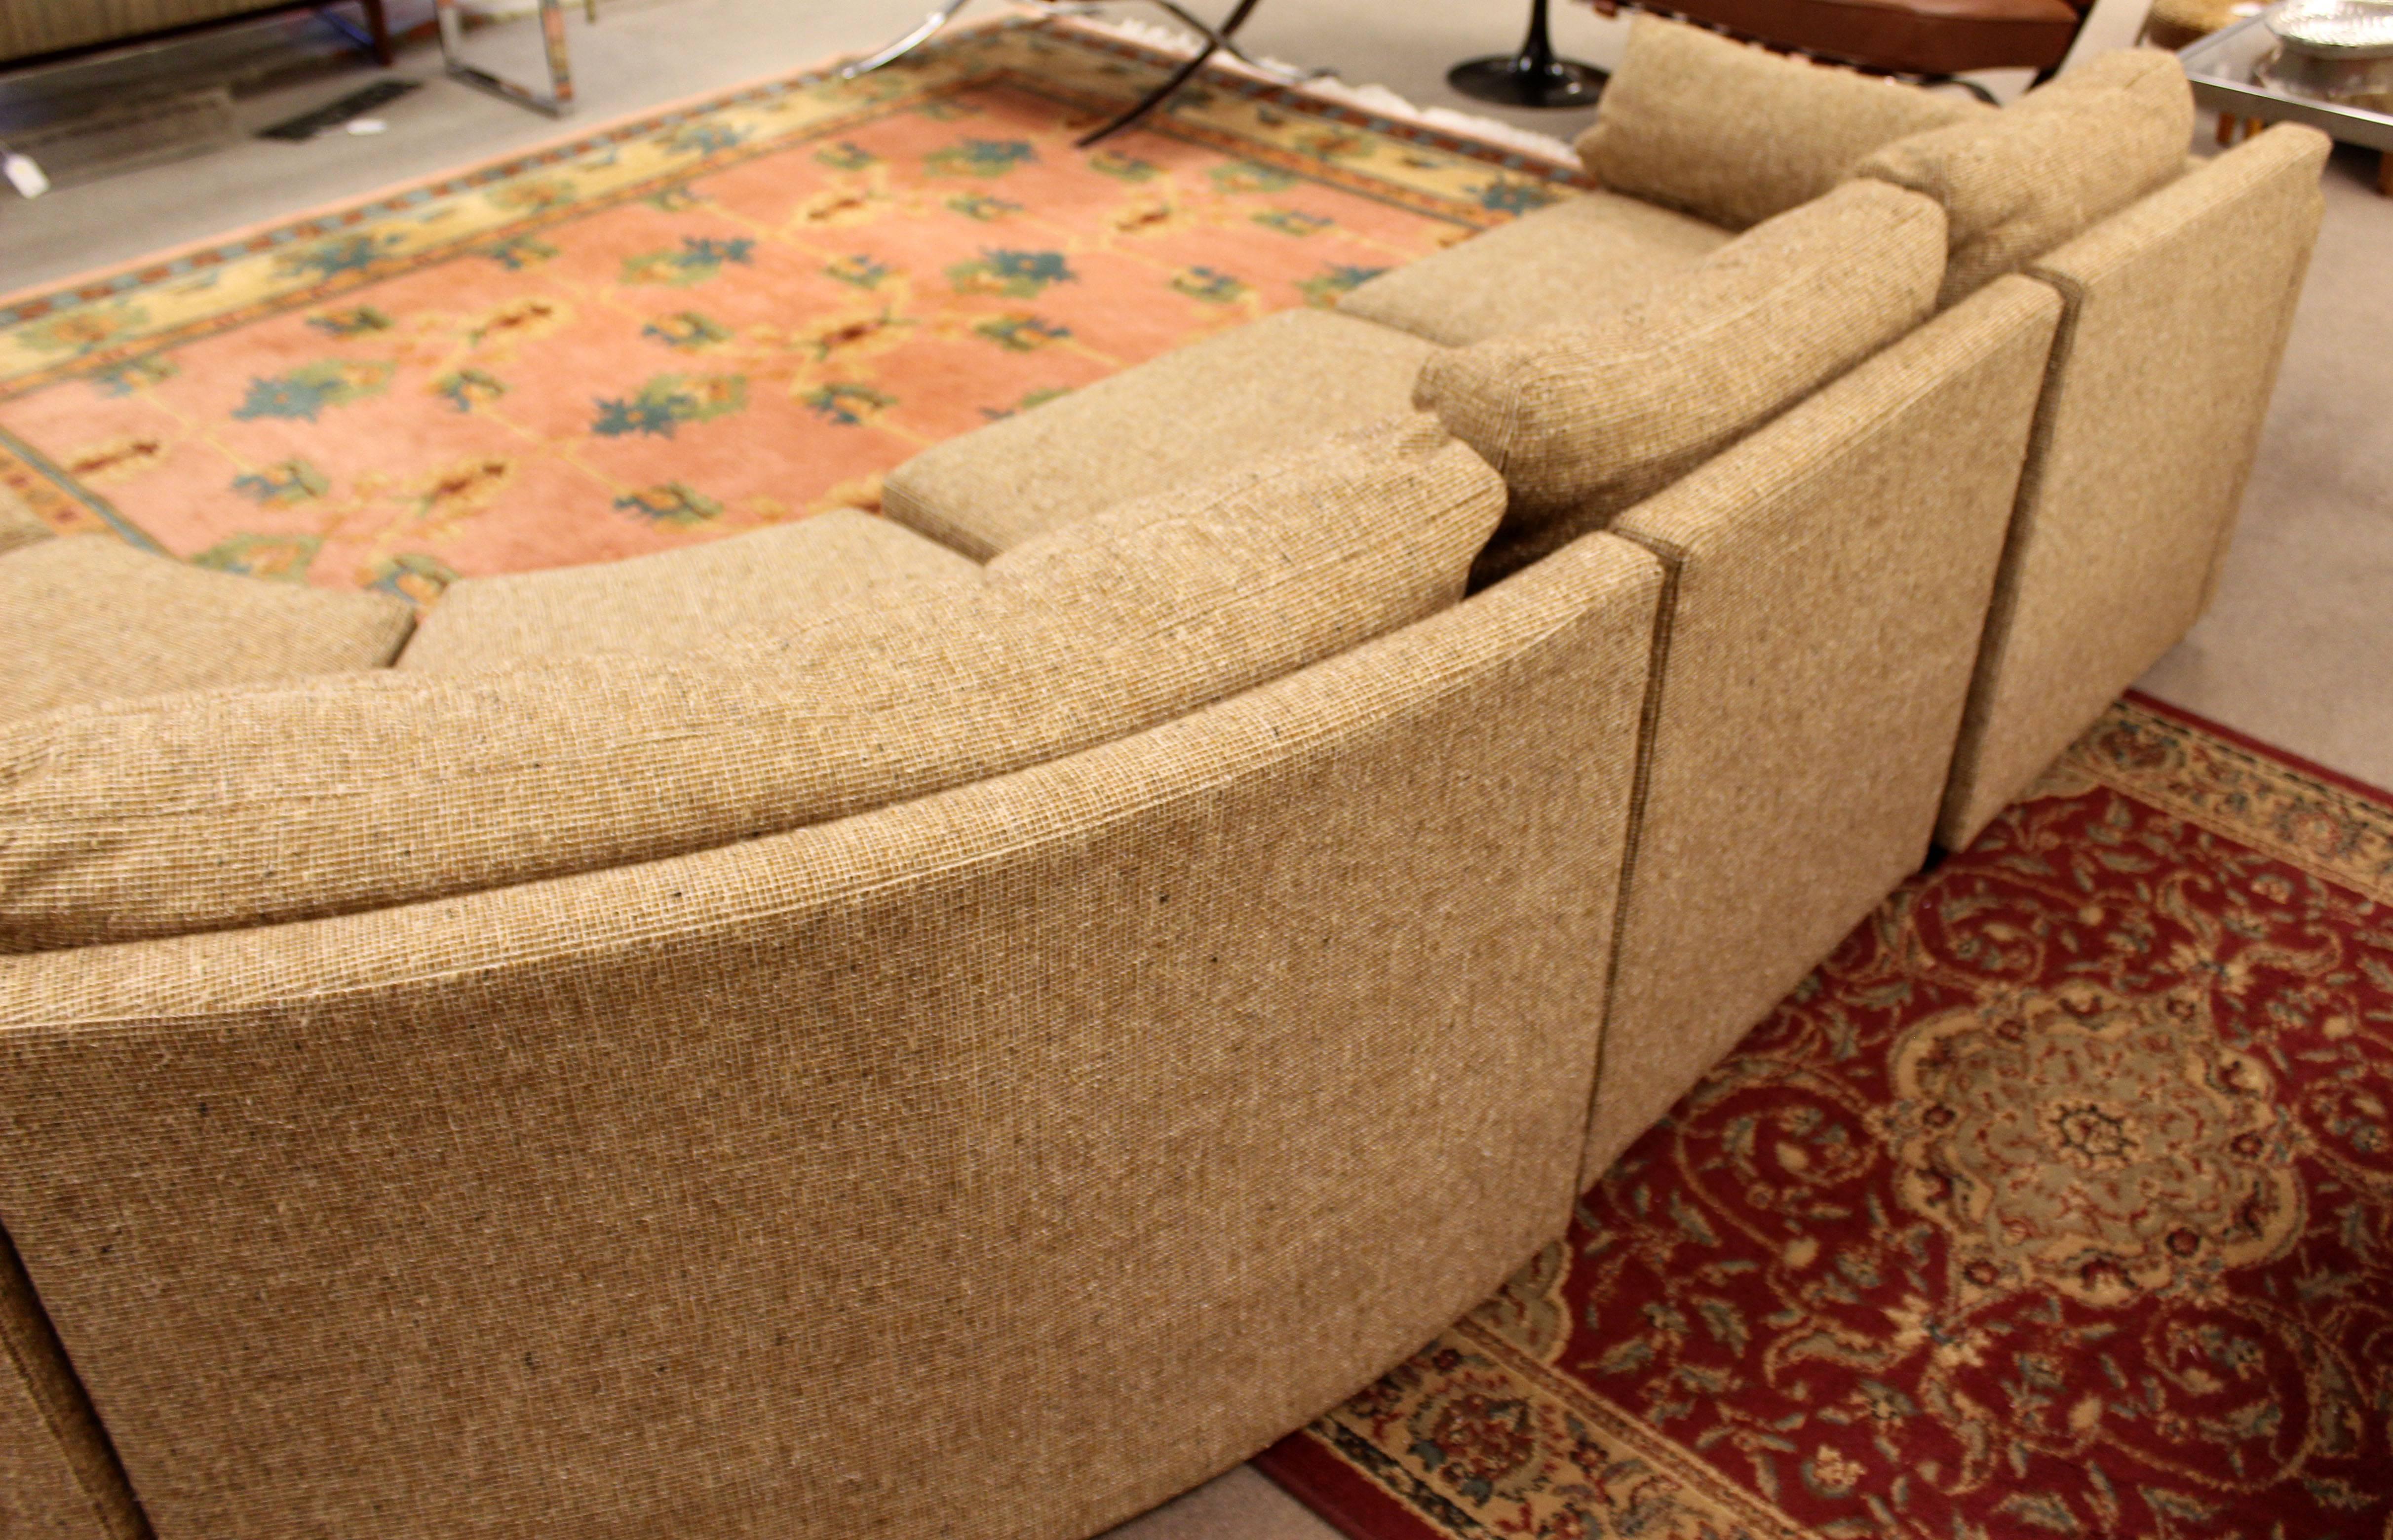 Late 20th Century Mid-Century Modern Curved Five-Piece Sofa Sectional Drexel Baughman Era